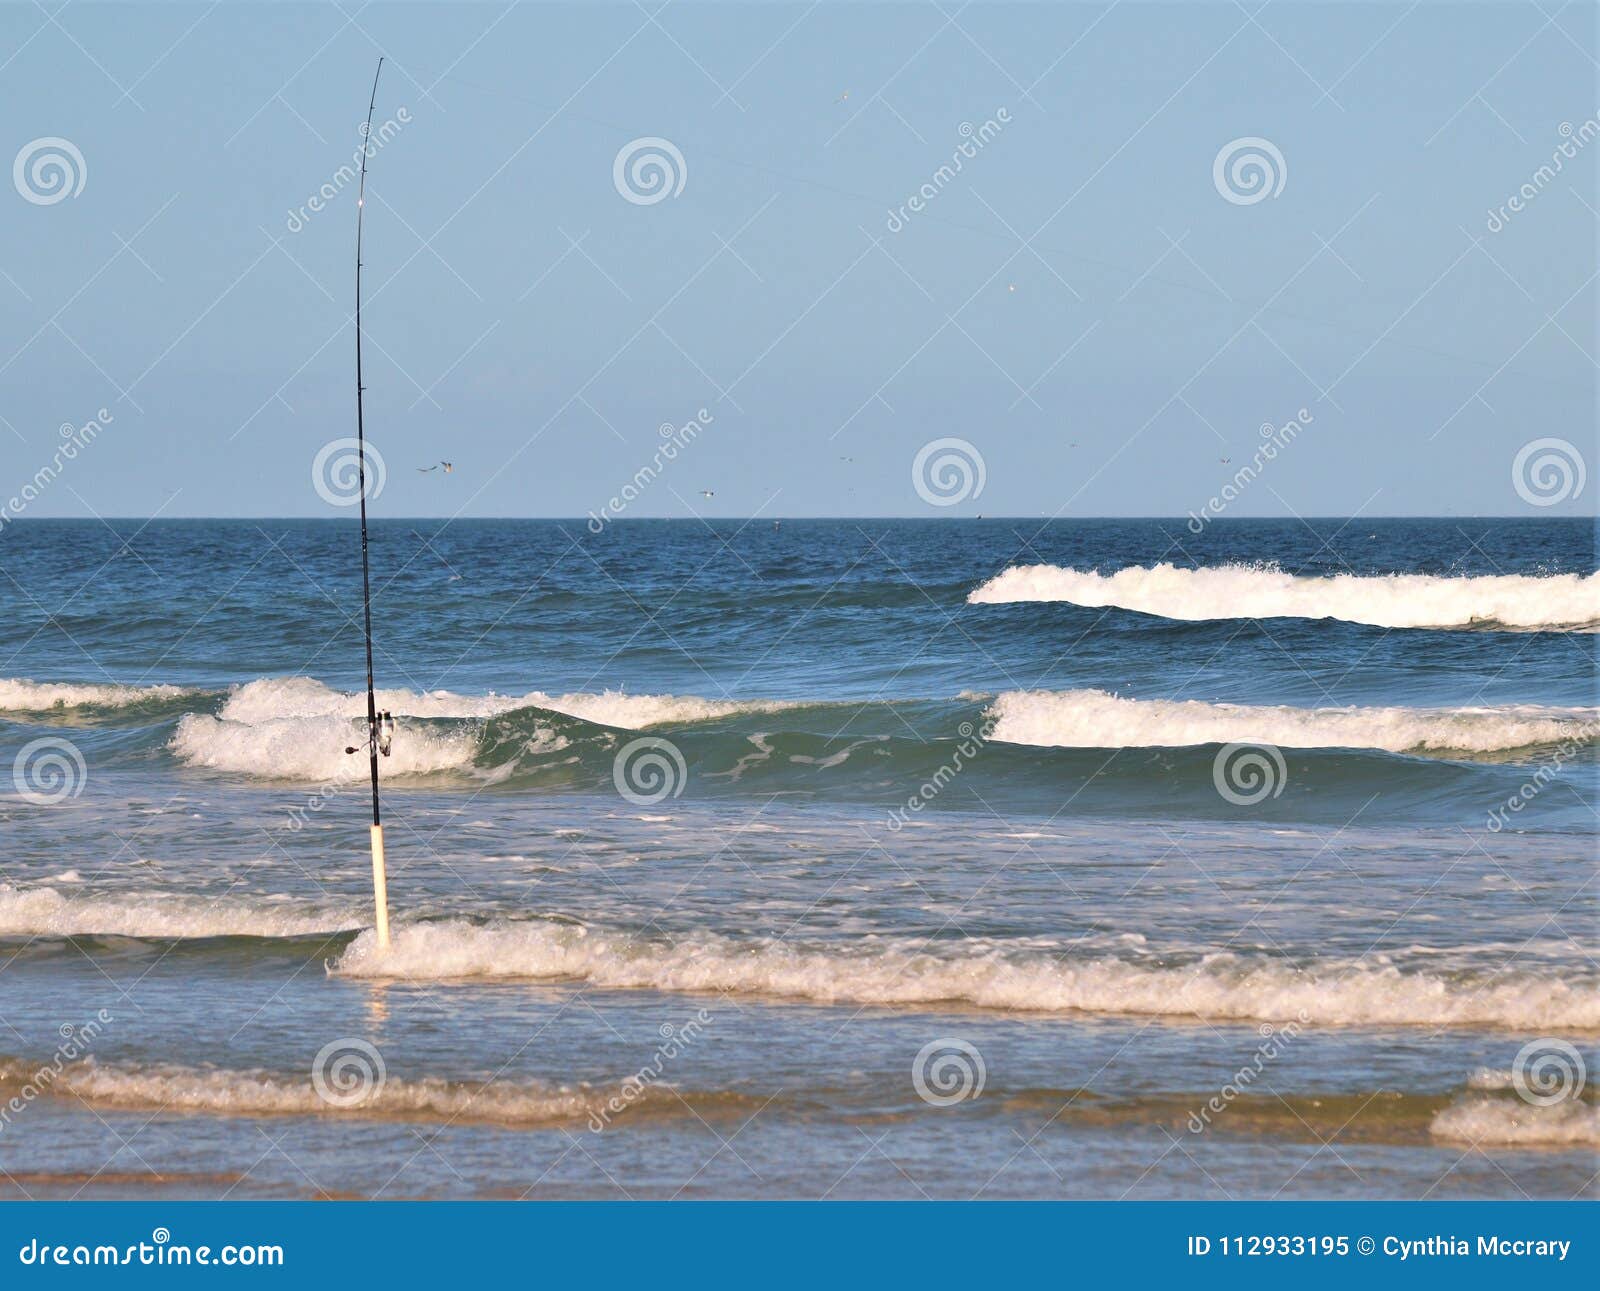 Surf Fishing at New Smyrna Beach, Florida Stock Image - Image of